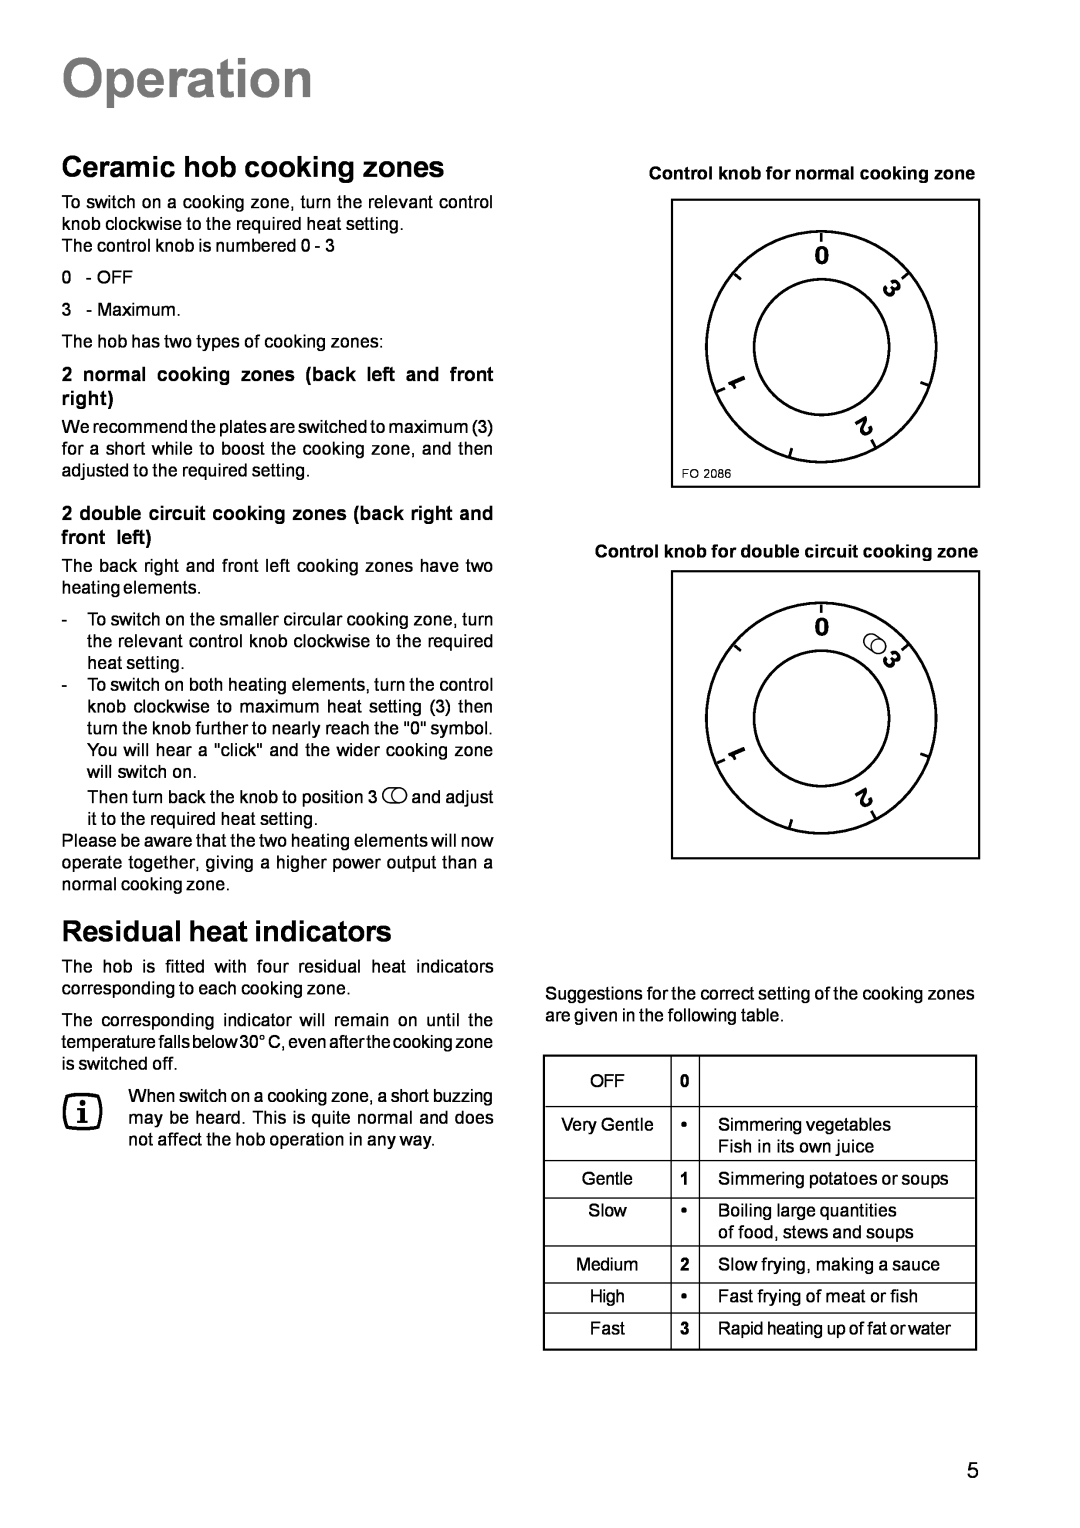 Zanussi ZCE 631 manual Operation, Ceramic hob cooking zones, Residual heat indicators 